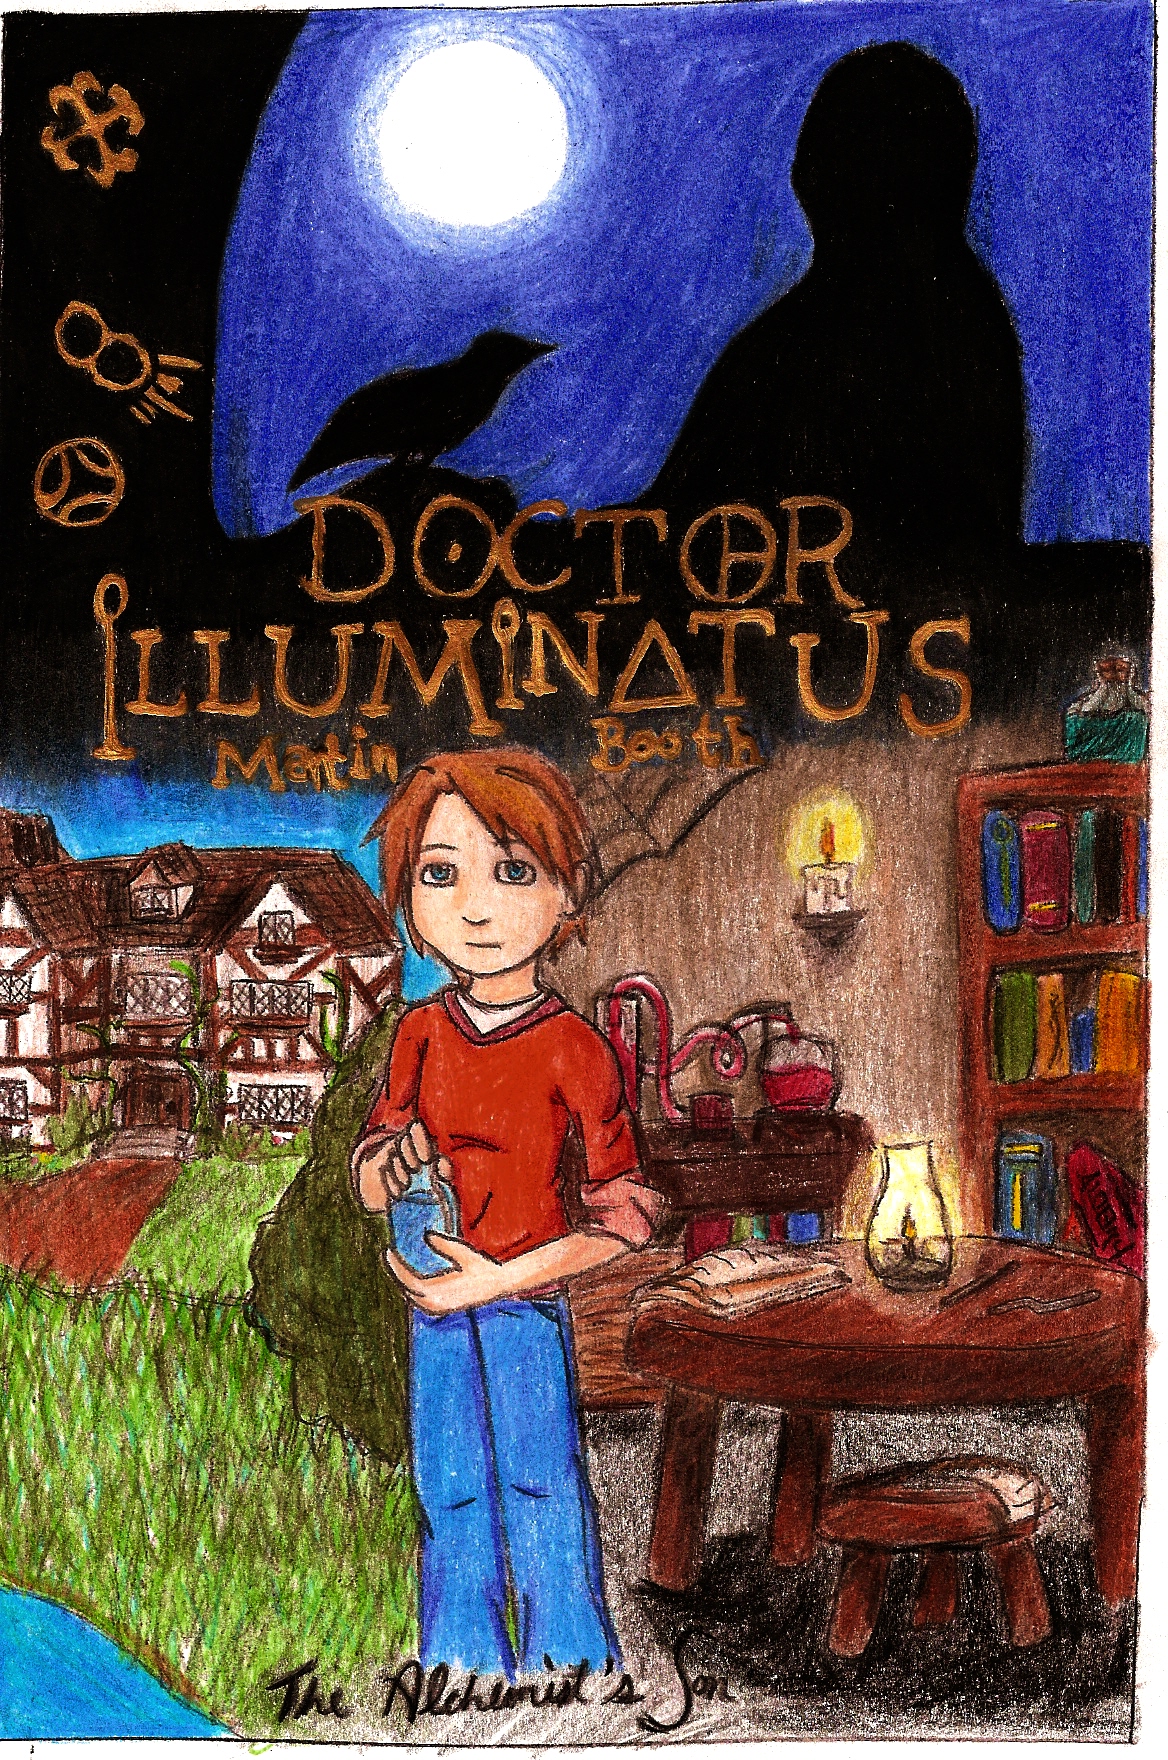 Doctor Illuminatus by mystic_rat_theif